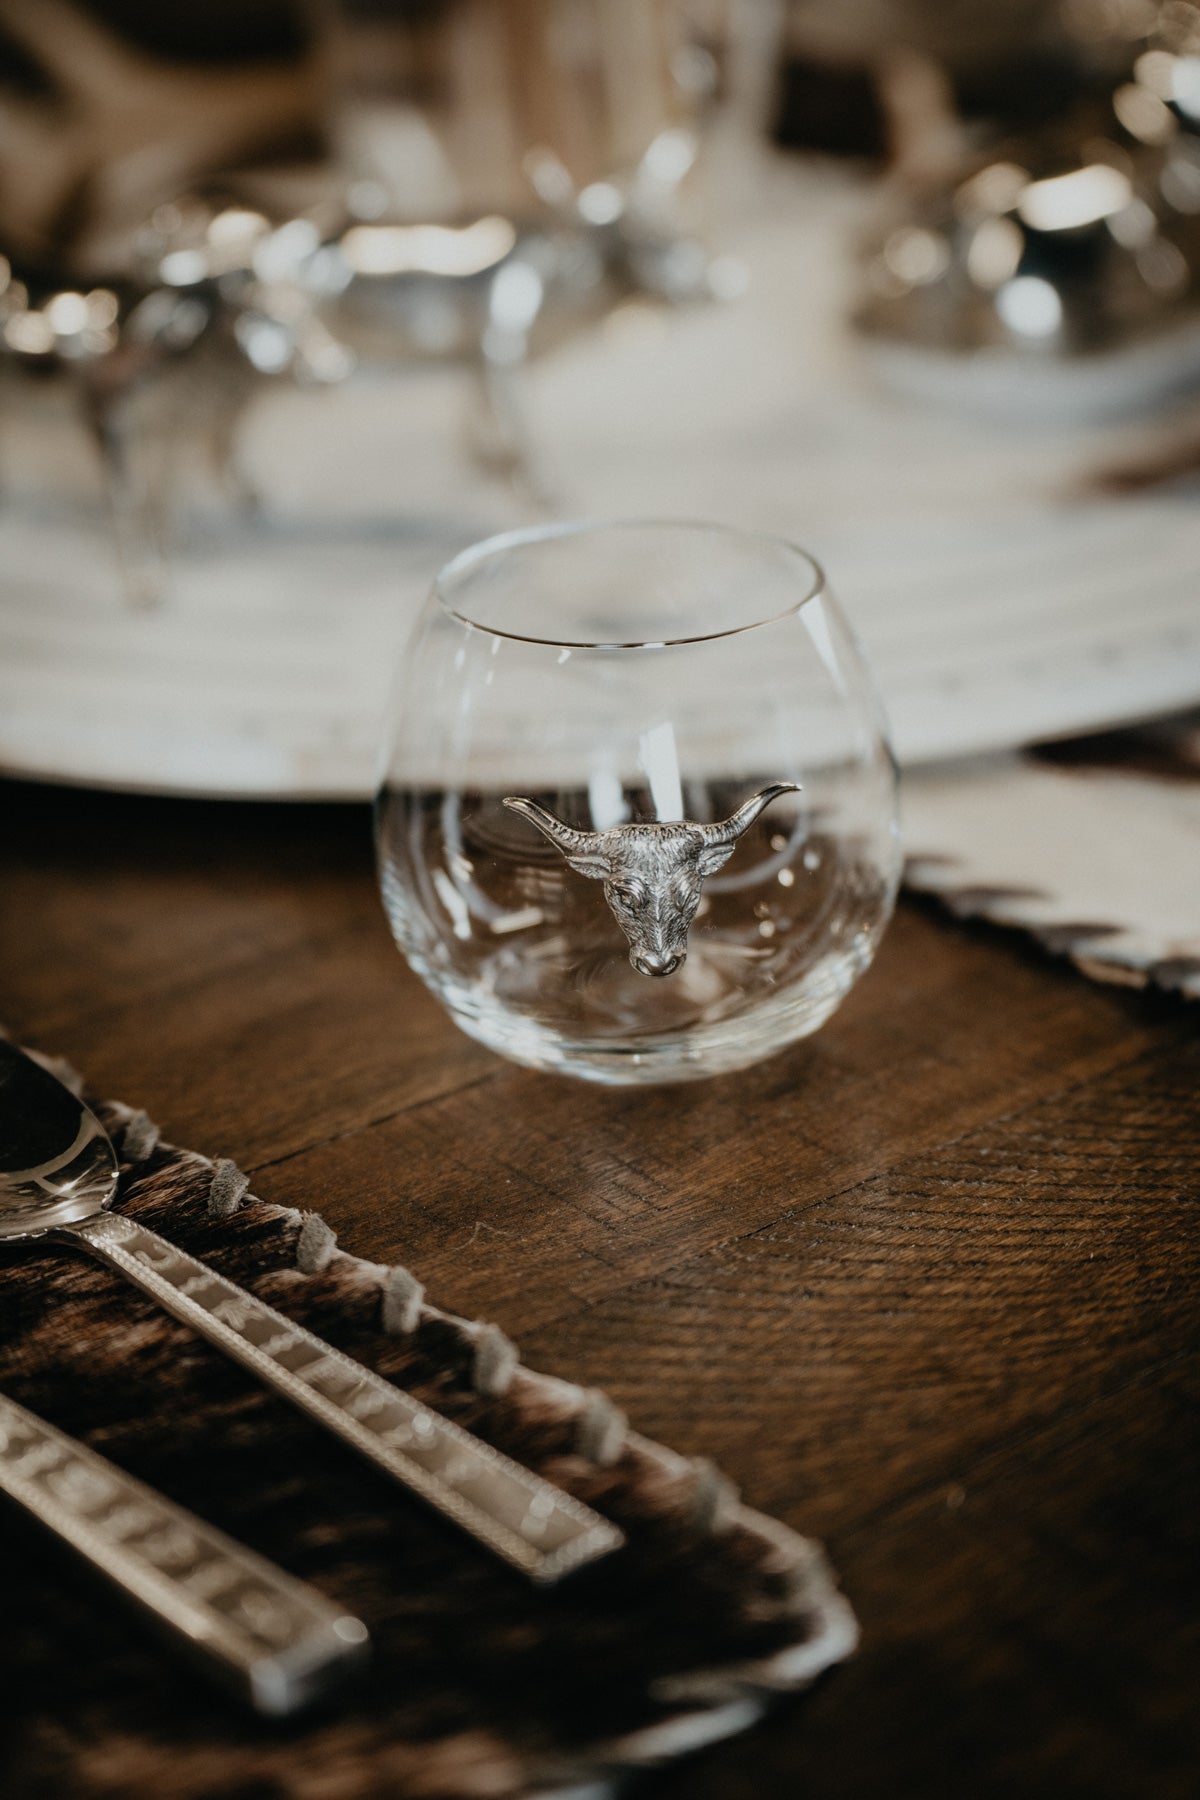 Glass & Pewter Longhorn Stemless Wineglass